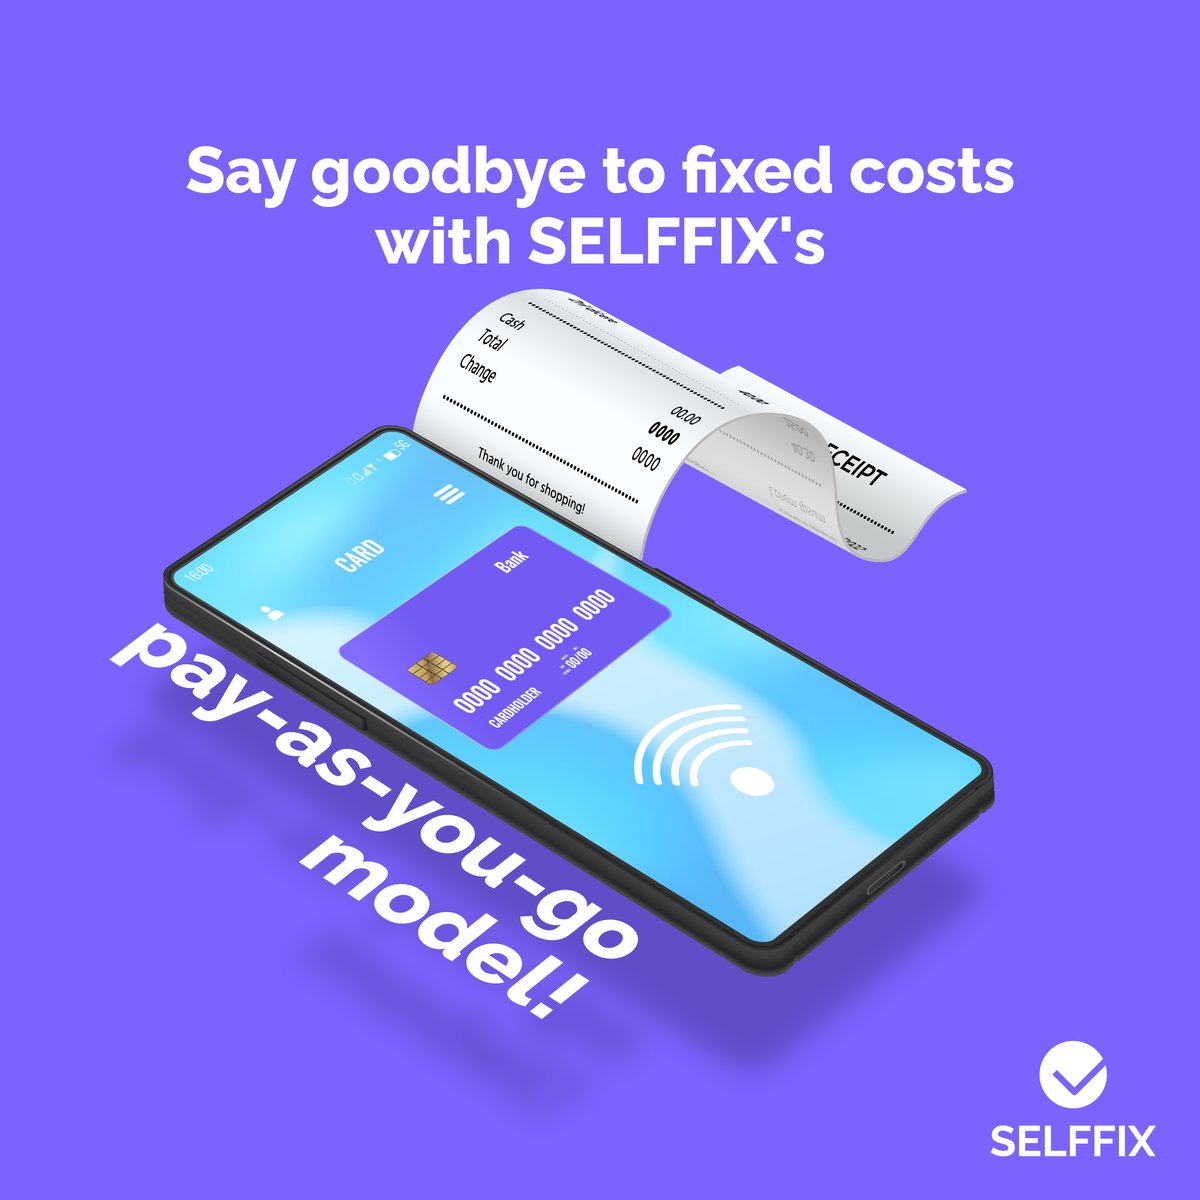 Pay as you go without fixed costs with #Selffix.

Selffix ile sabit maliyetler olmadan kullandıkça ödeyin.

#smartsolutions #RemoteServicePlatform #AI #AR